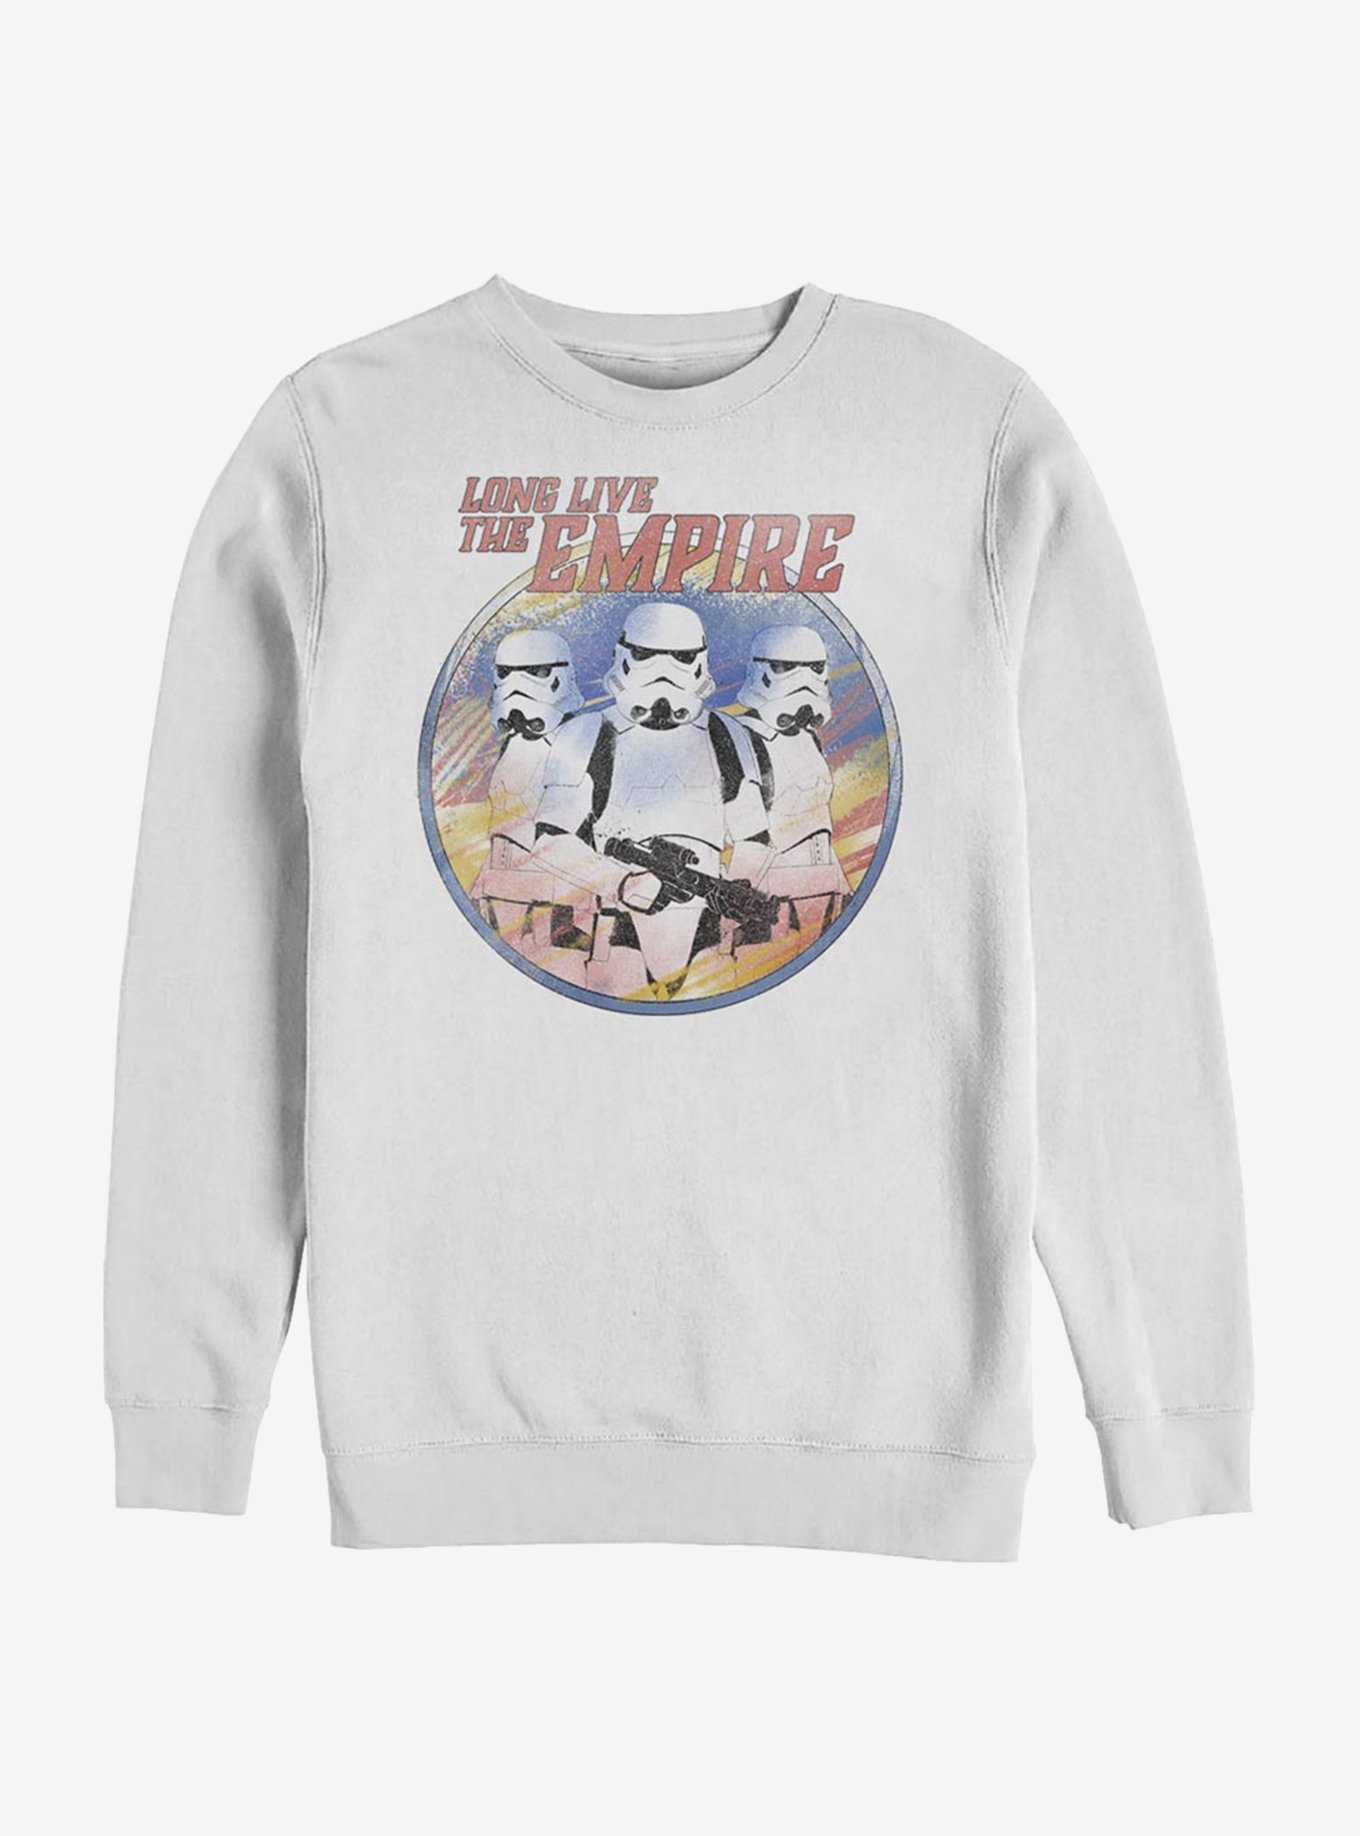 Star Wars The Mandalorian Long Live The Empire Crew Sweatshirt, , hi-res